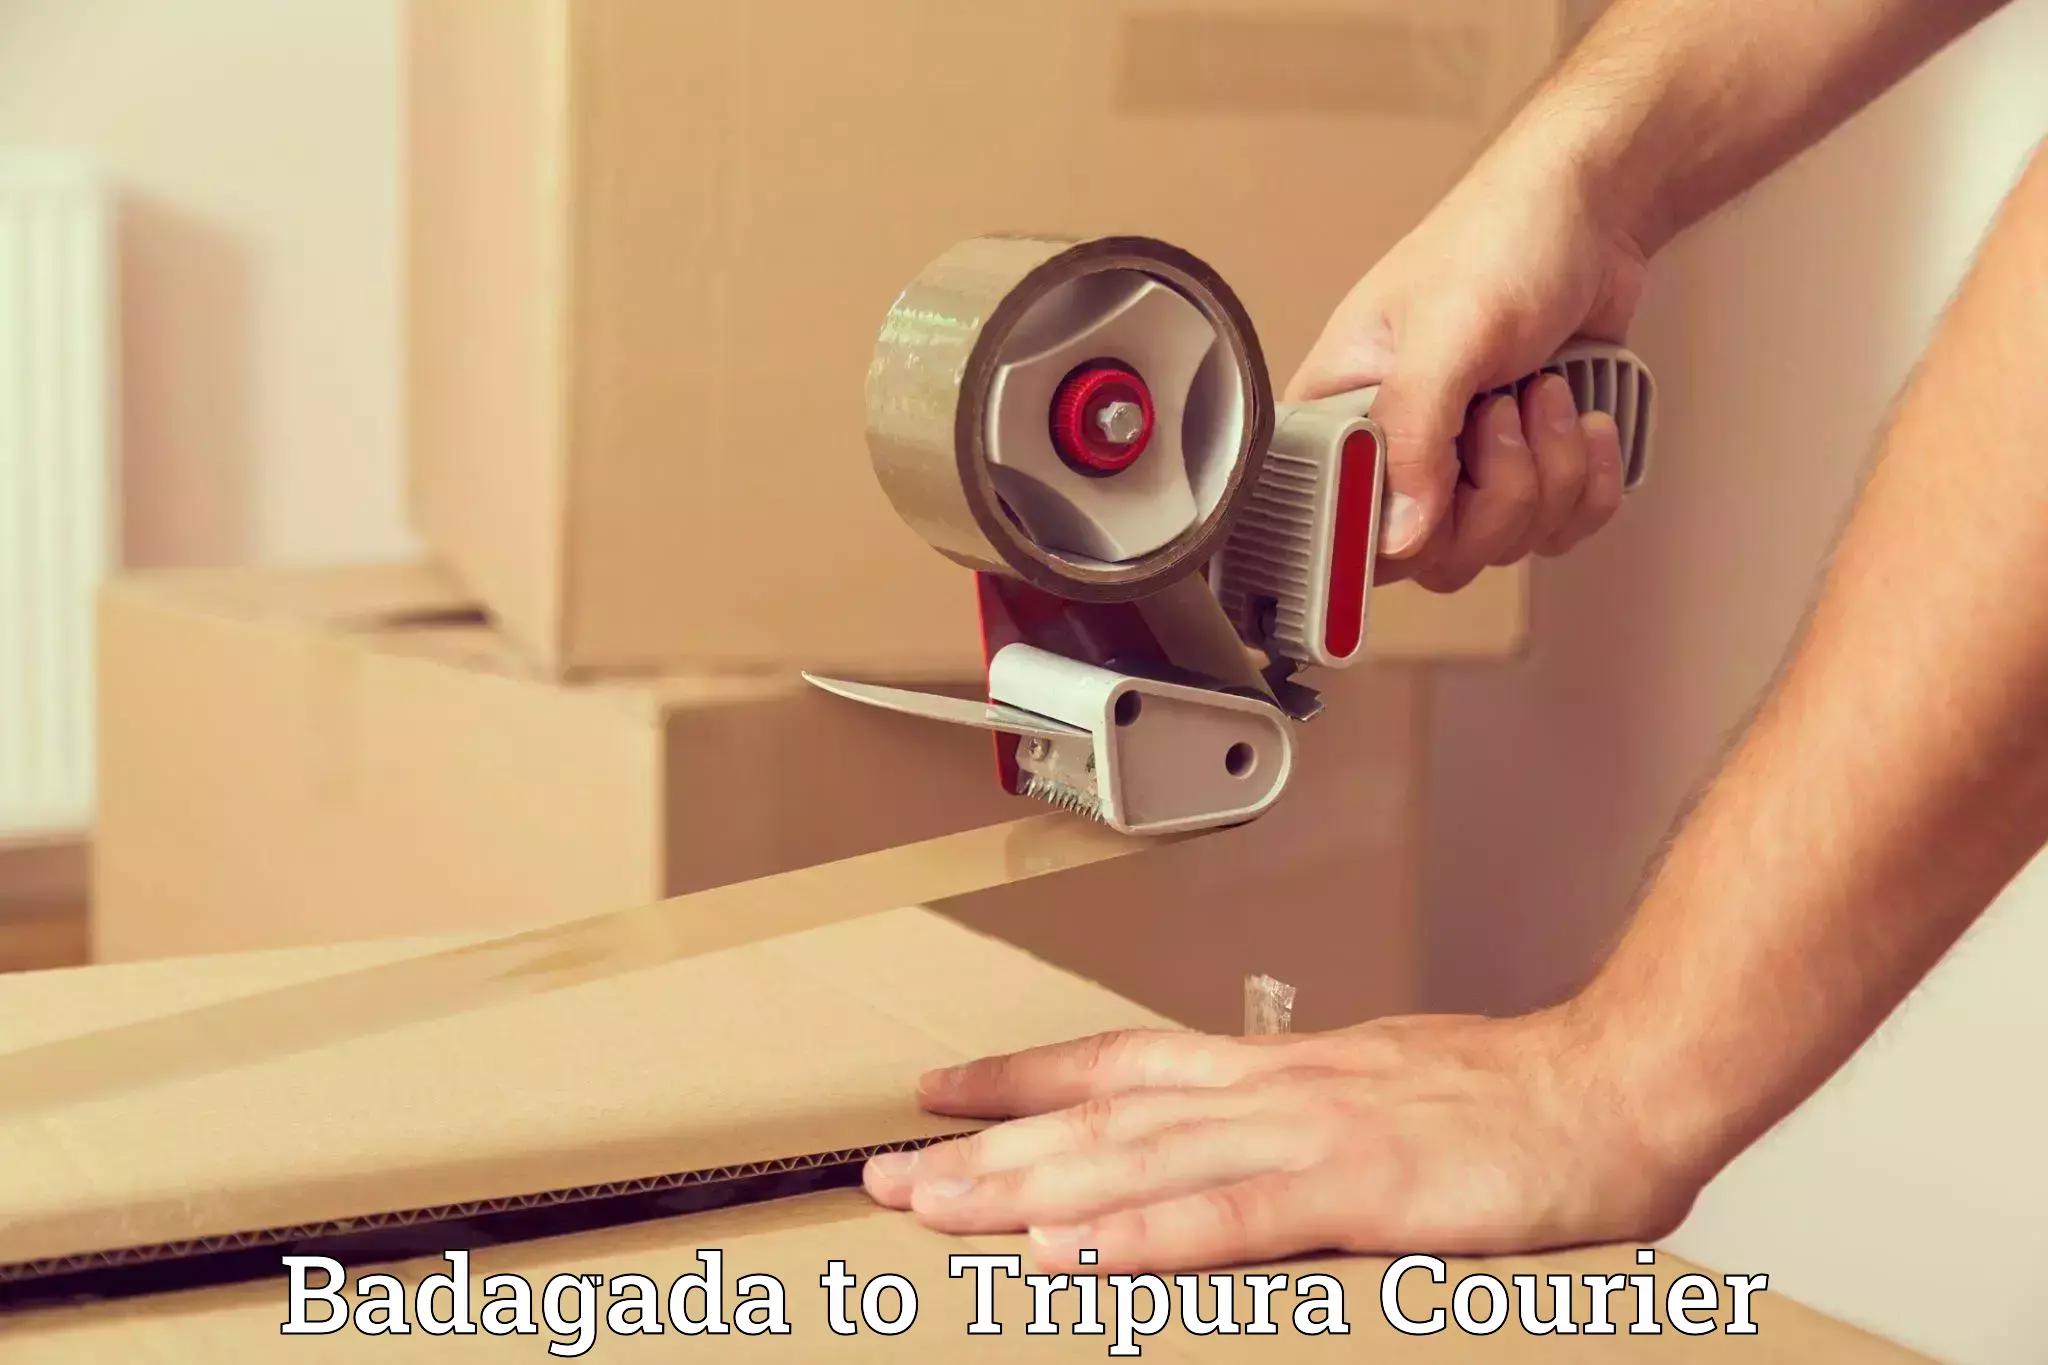 Professional packing services Badagada to Tripura